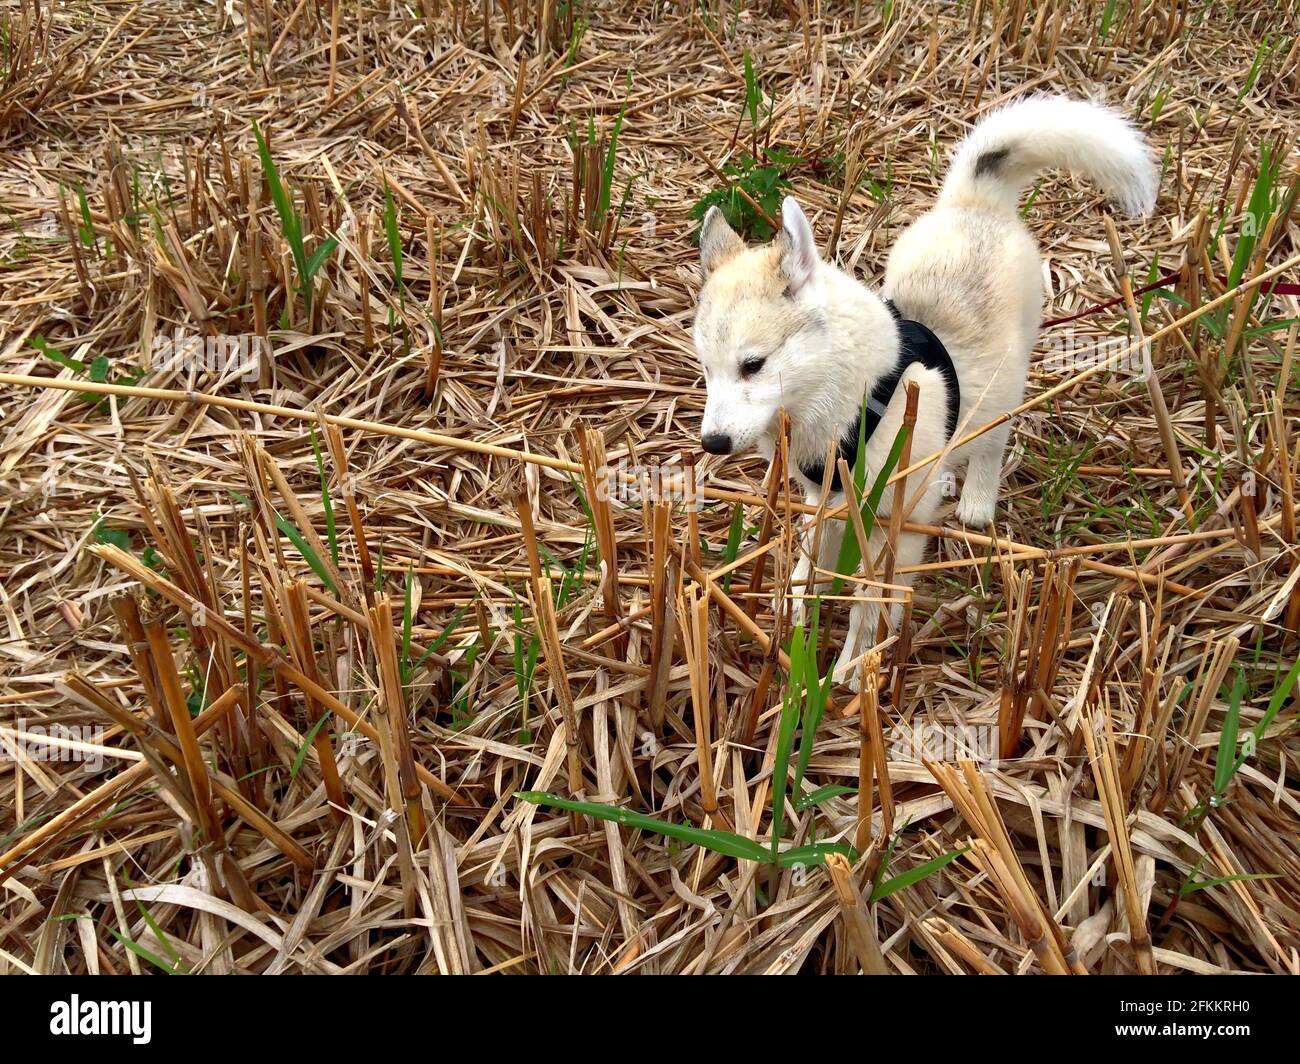 A cute American Eskimo puppy walking in a field Stock Photo